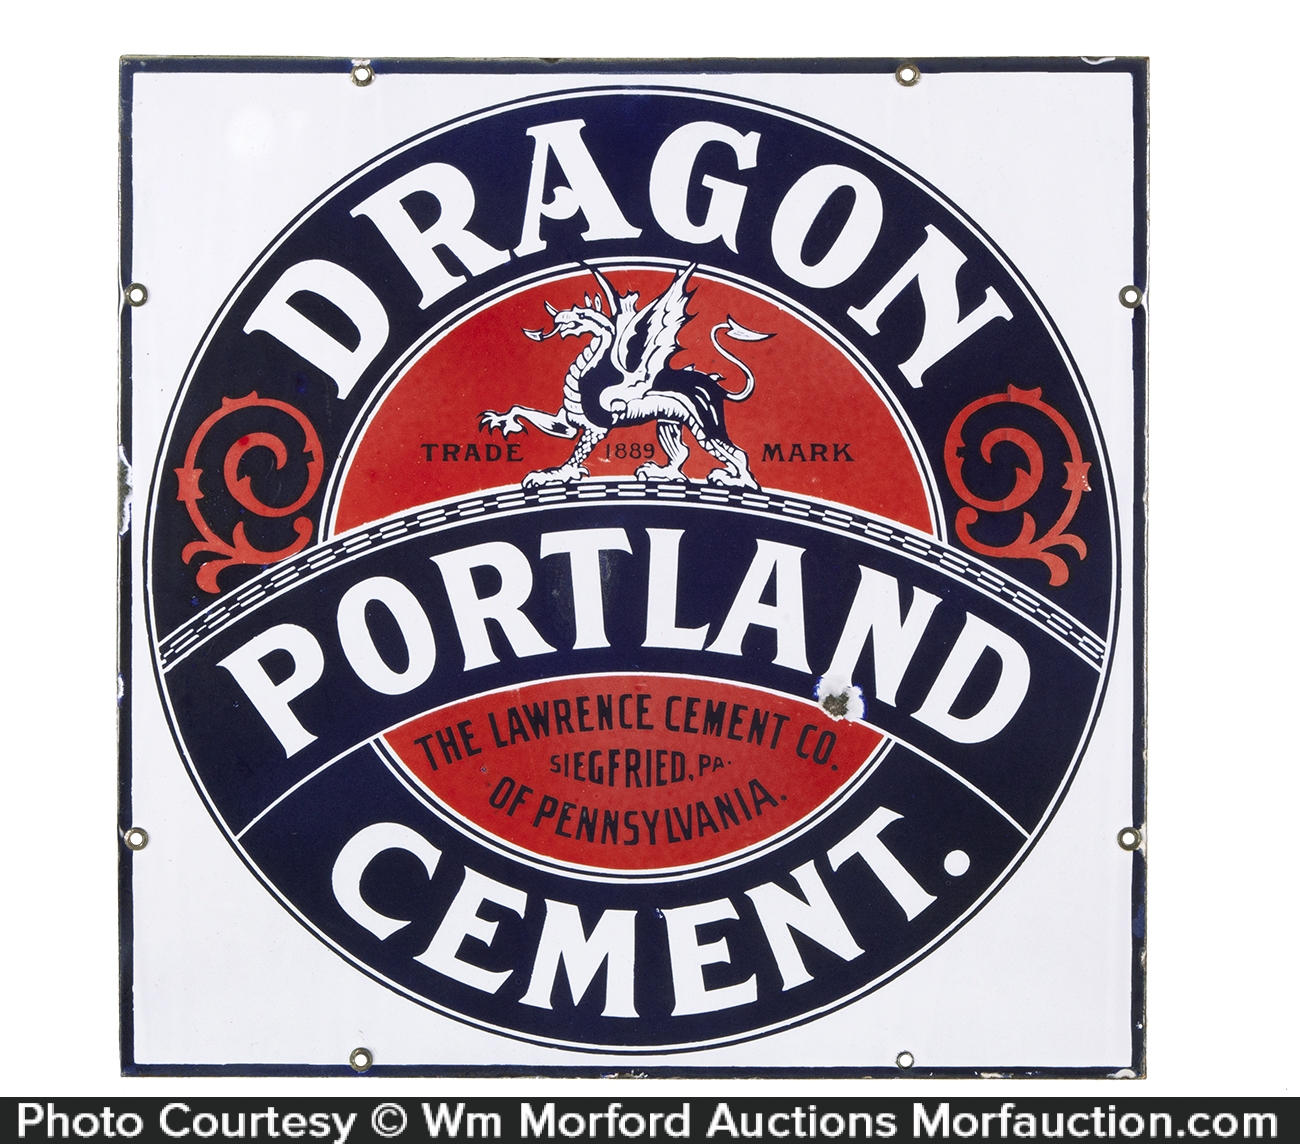 Antique Advertising | Dragon Portland Cement Sign • Antique Advertising